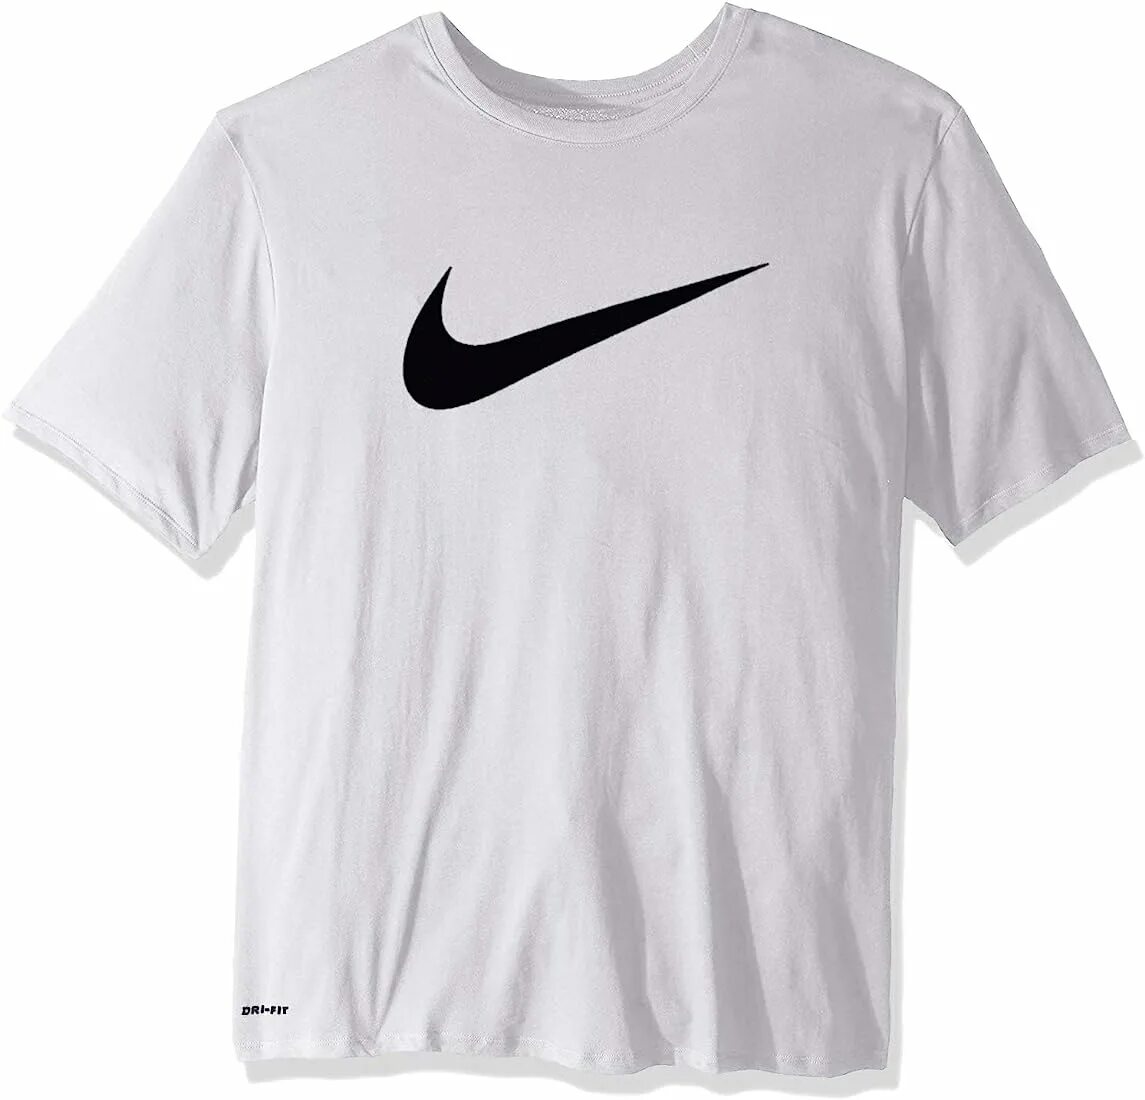 Nike Dri Fit Swoosh. The Nike Tee Dri-Fit. Футболка Nike Swoosh белая. Nike big Swoosh футболка мужская. Продажи найк